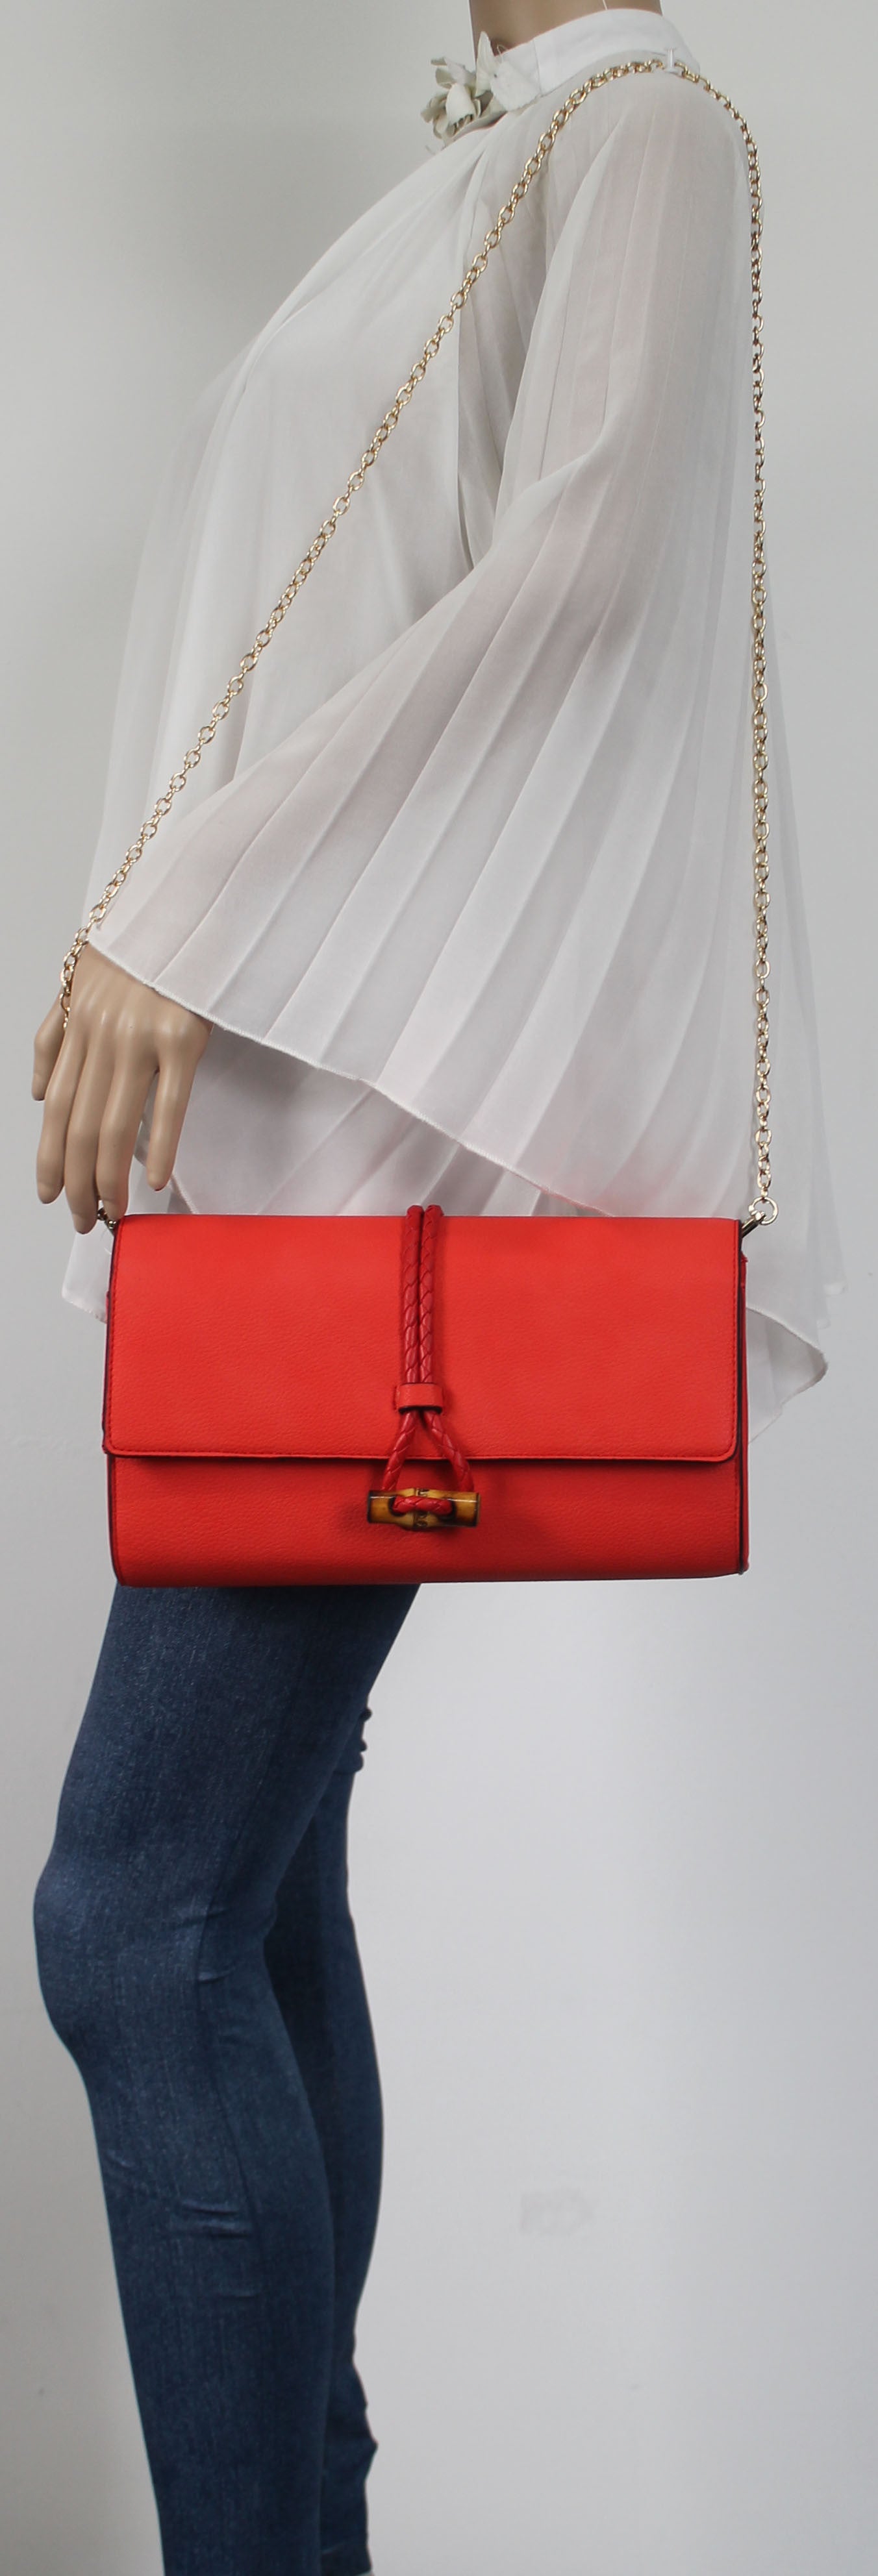 SWANKYSWANS Sophia Clutch Bag Scarlet Cute Cheap Clutch Bag For Weddings School and Work